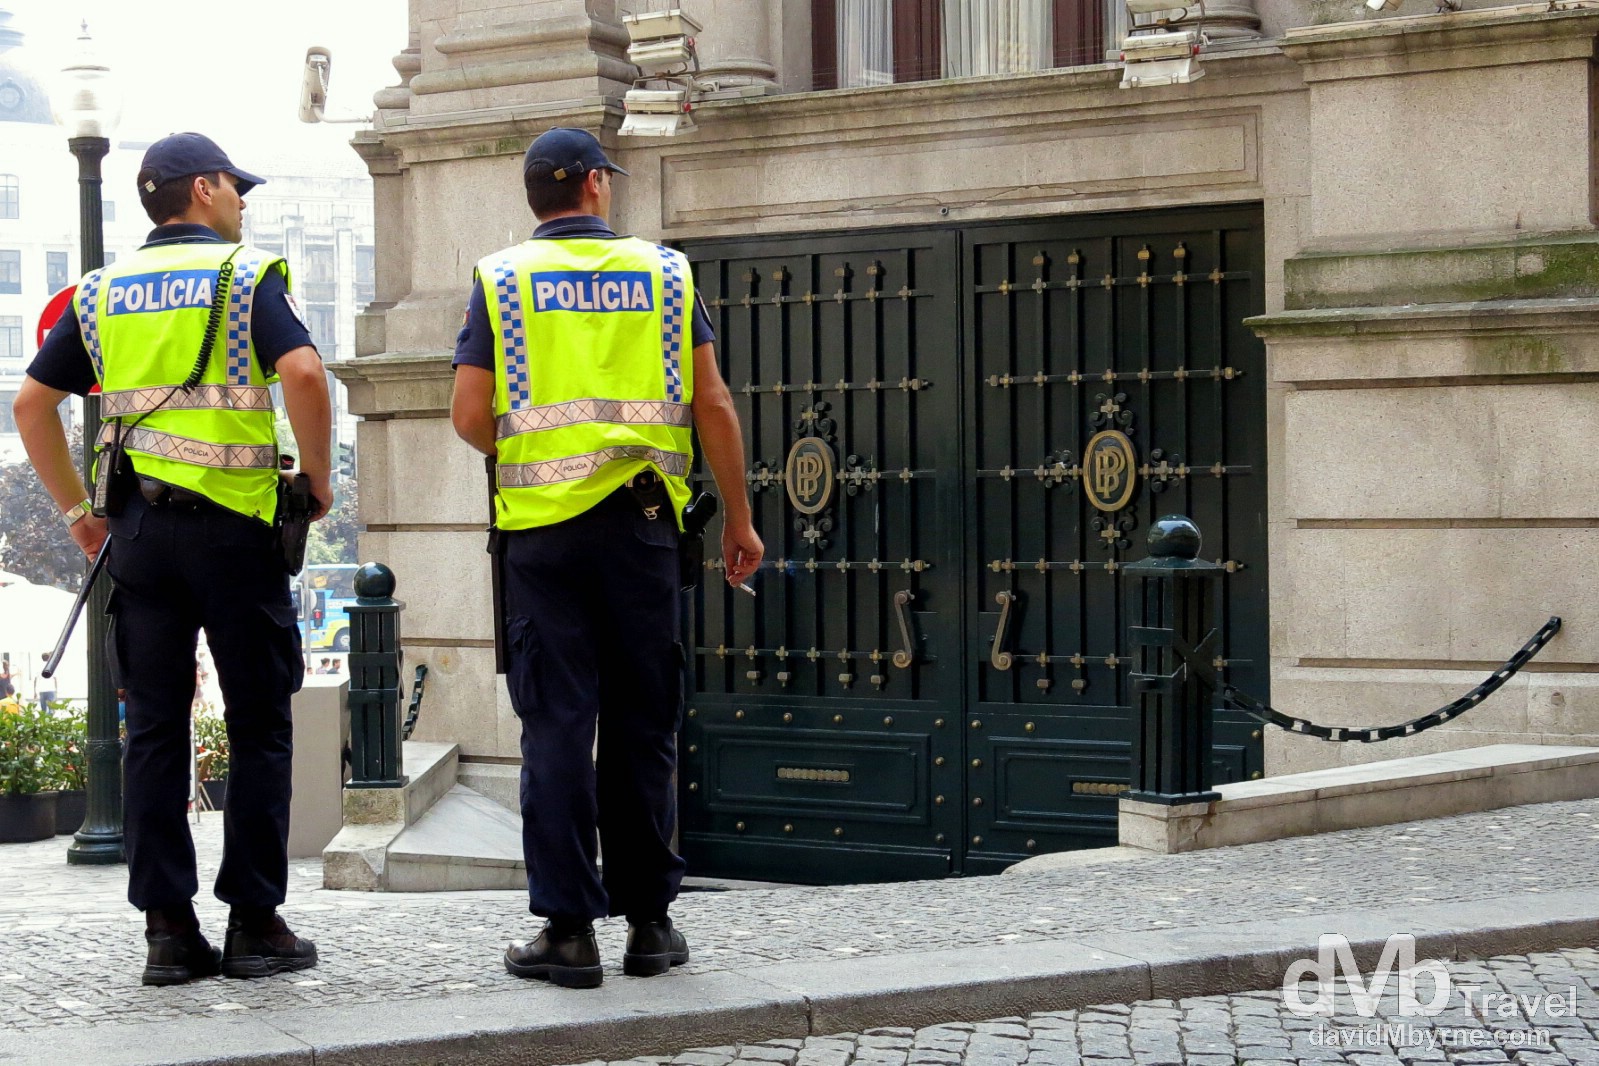 Guarding the Bank of Portugal, Rua do Almada, Porto, Portugal. August 28th 2013.